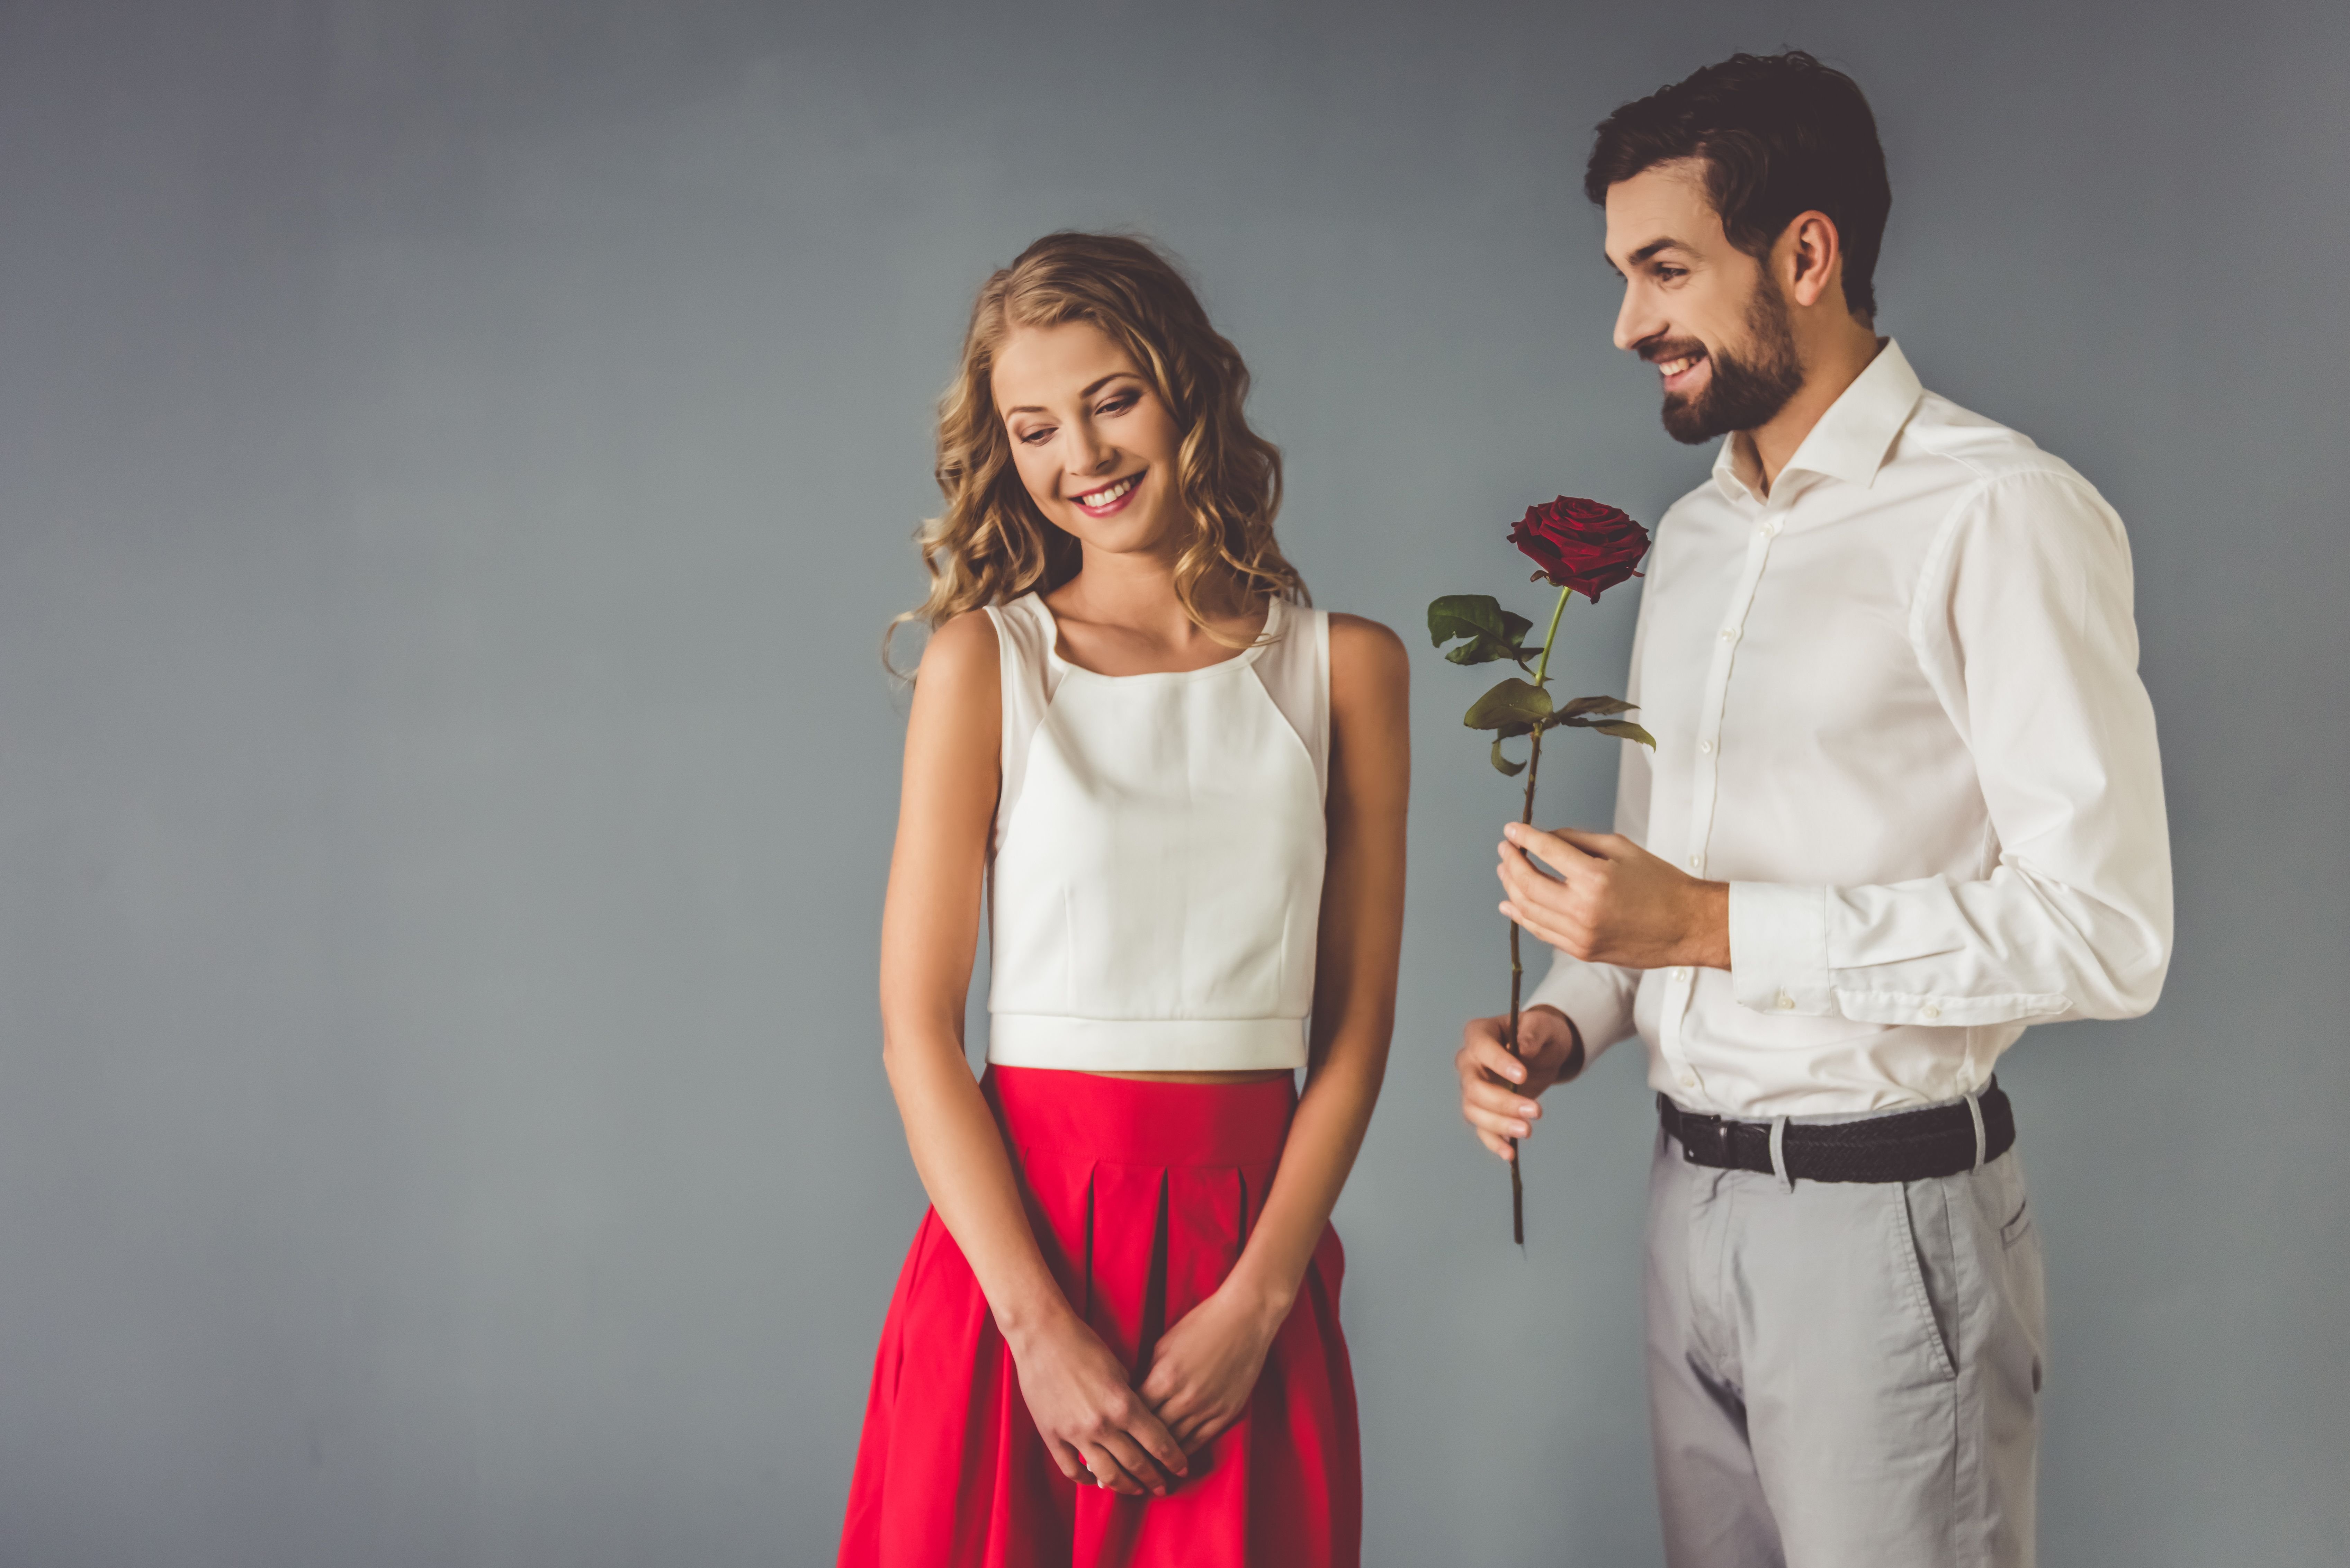 A man gives a woman flowers. | Source: Shutterstock